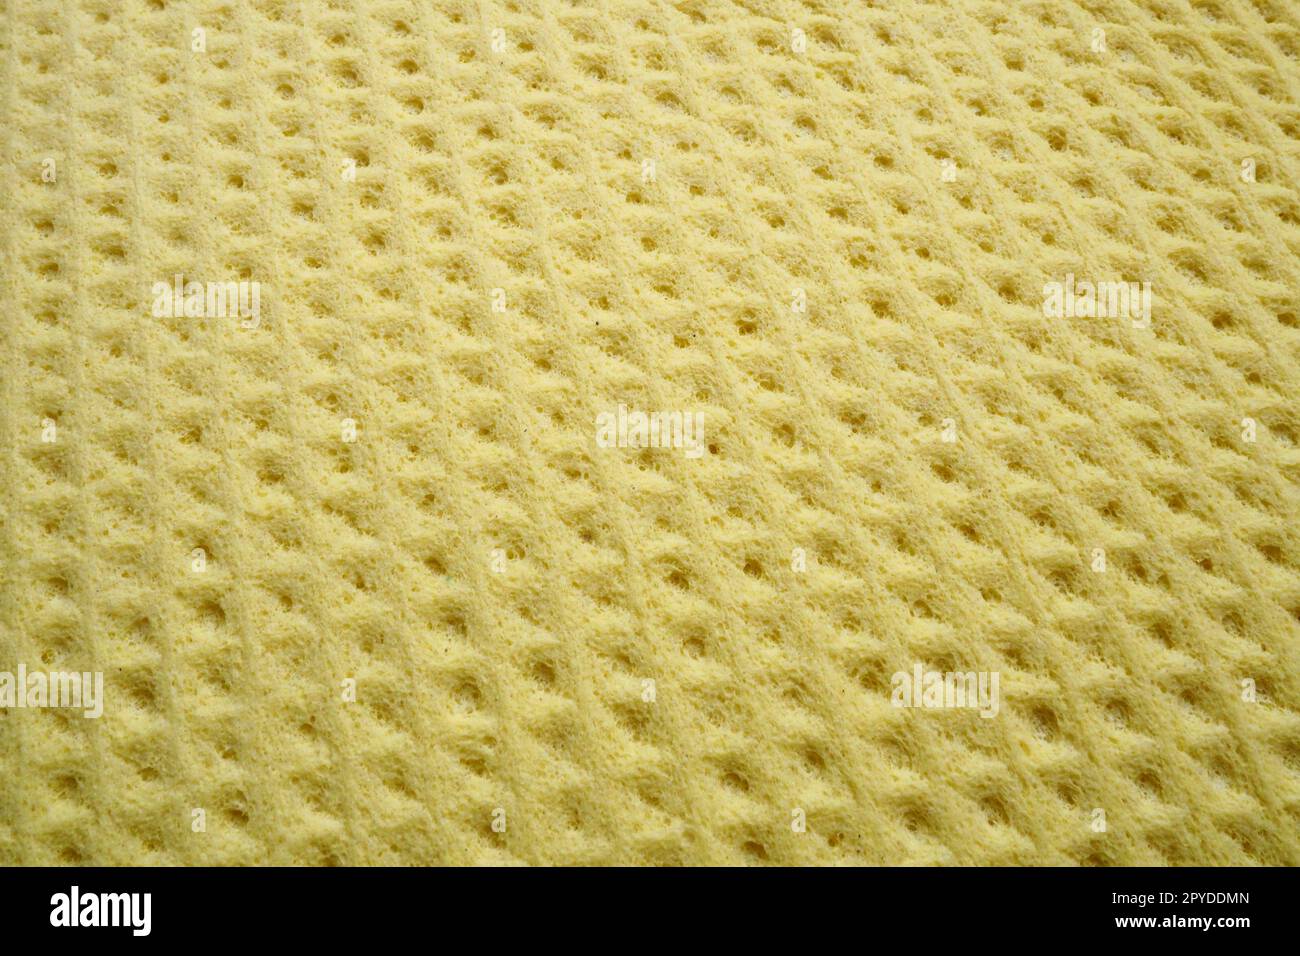 Sponge fibers sponge texture pattern surface close-up yellow background Stock Photo